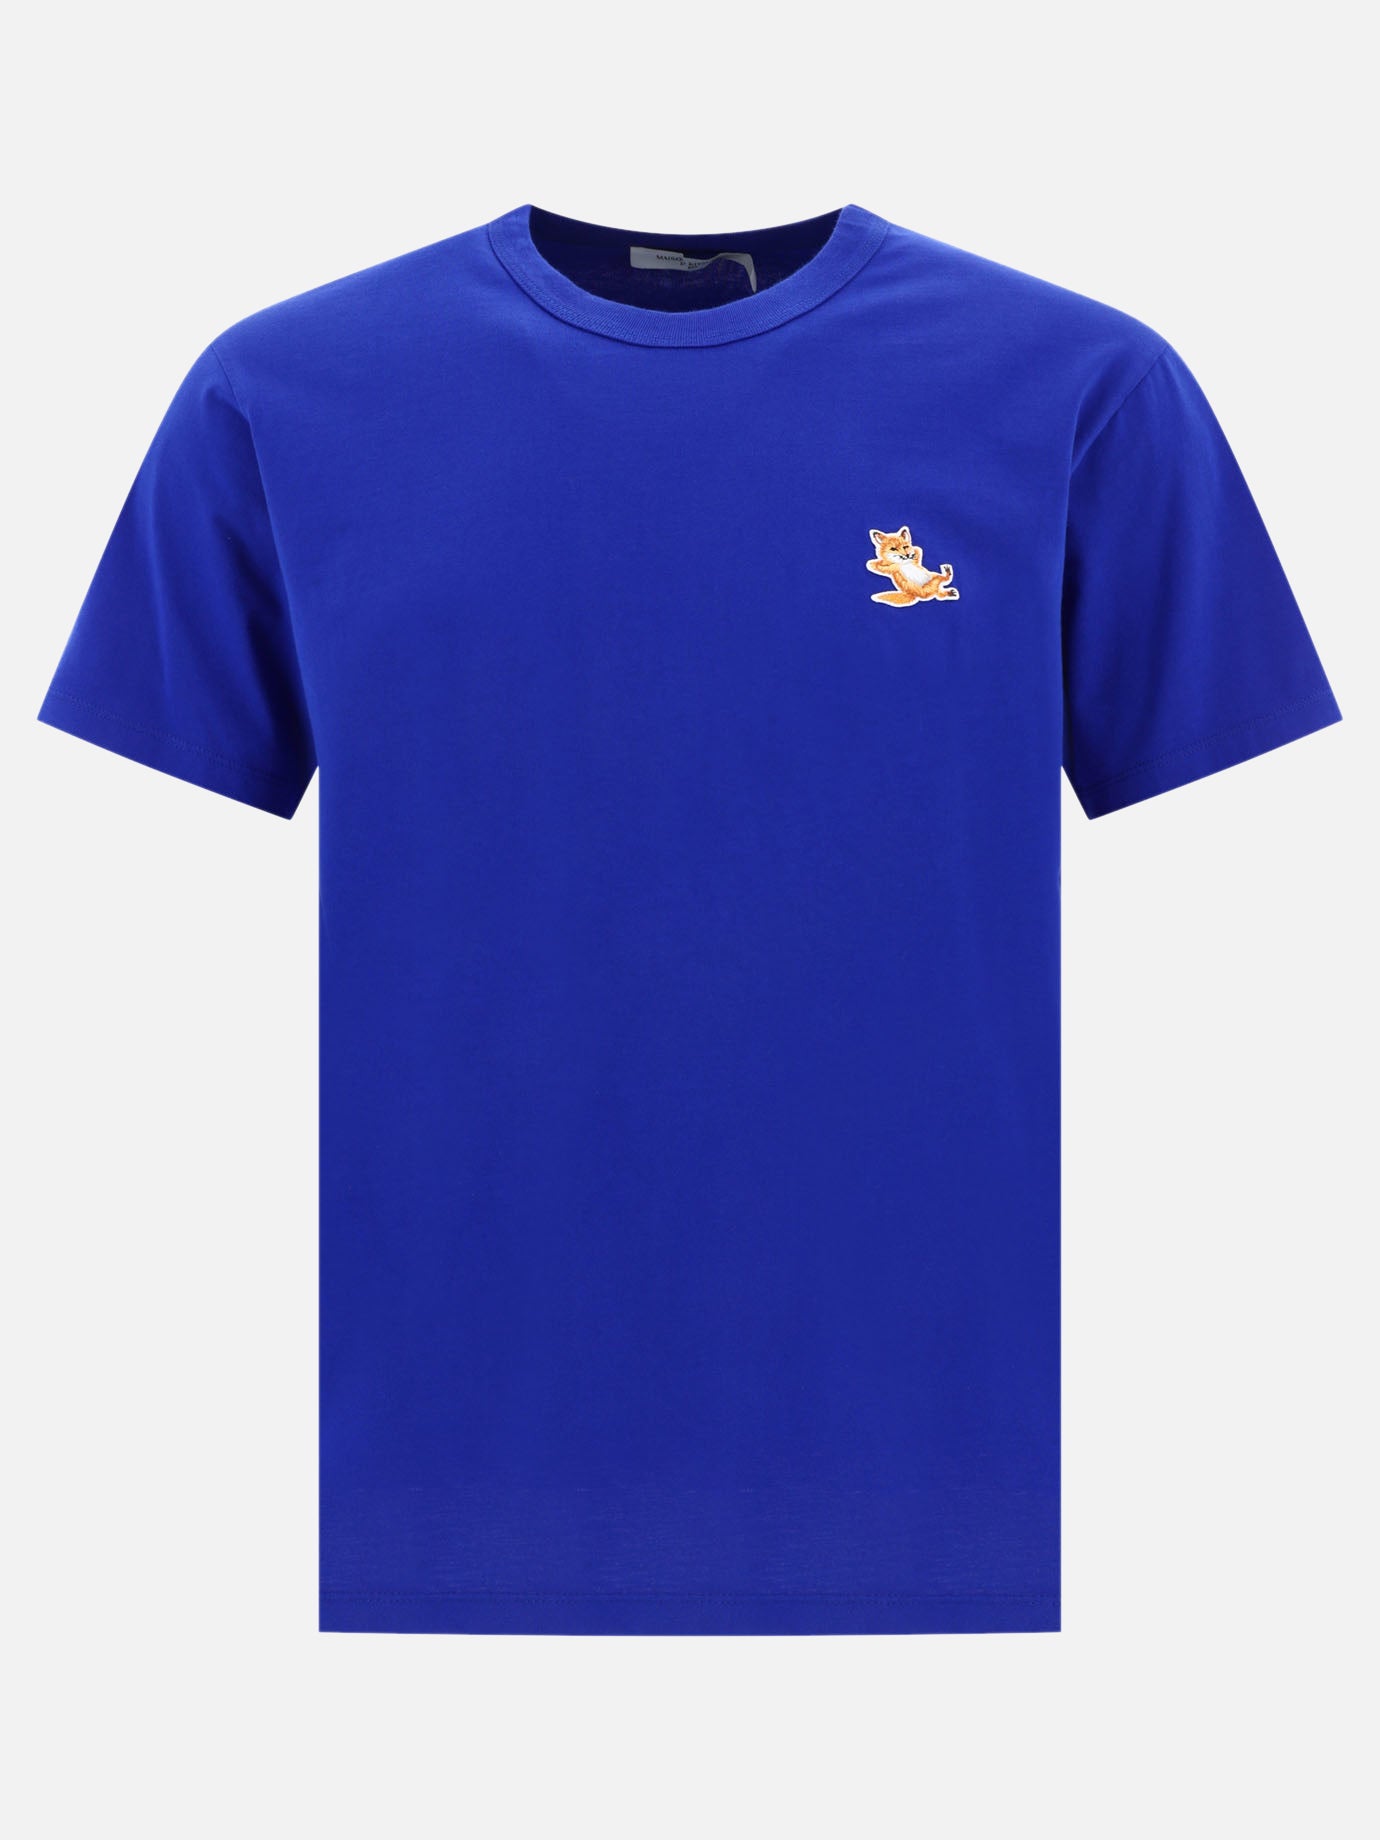 "Chillax Fox" t-shirt